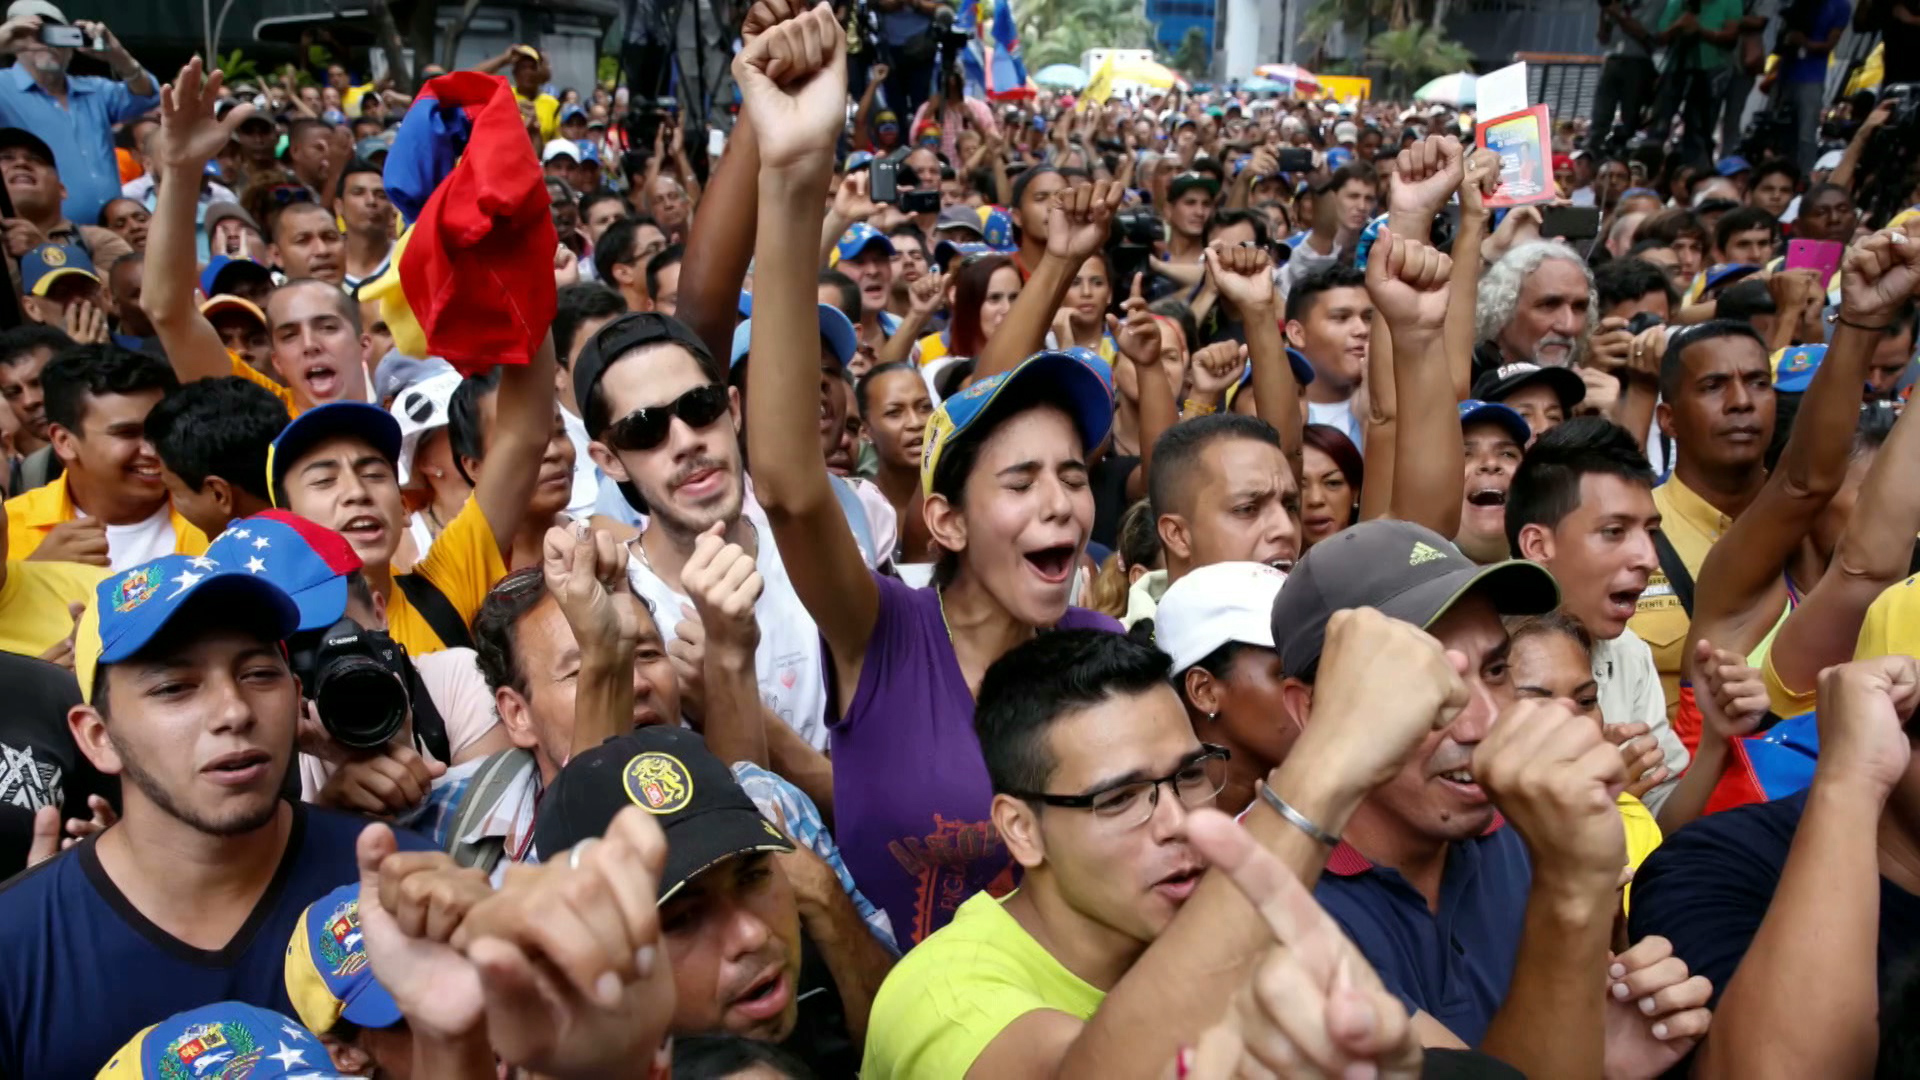 The Heat: Venezuela’s economic crisis